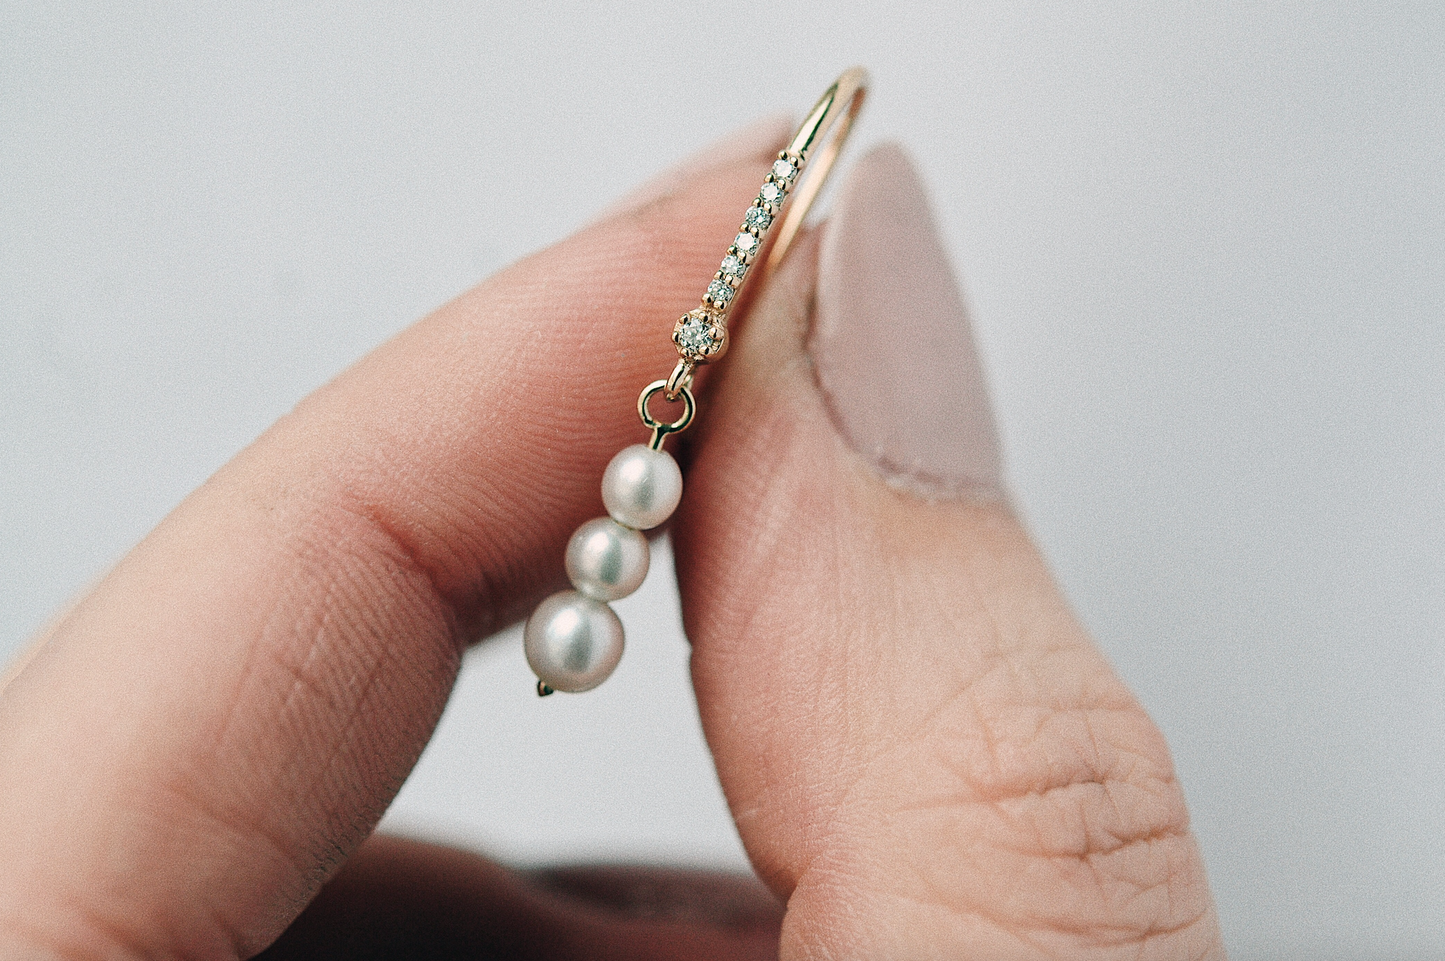 SAMPLE Diamond Flute with Three Pearls Earring